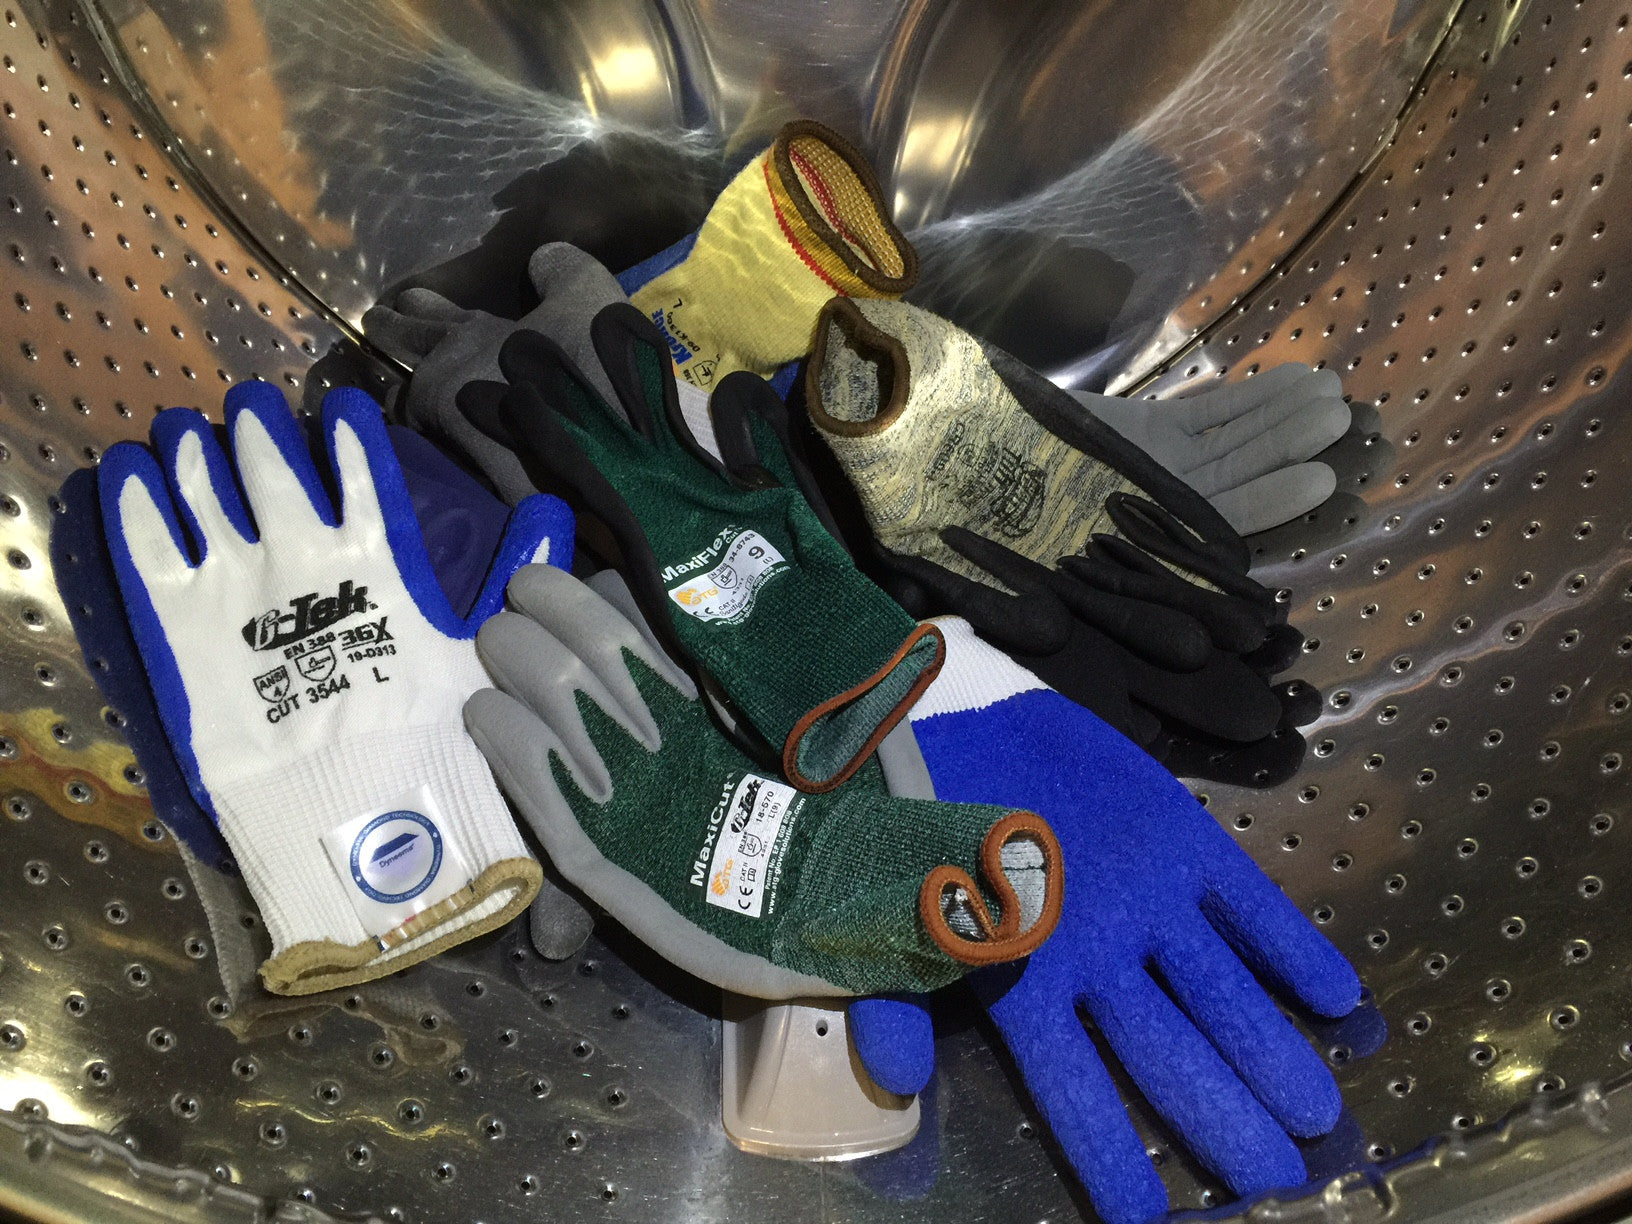 How to Clean Work Gloves  Blain's Farm & Fleet Blog